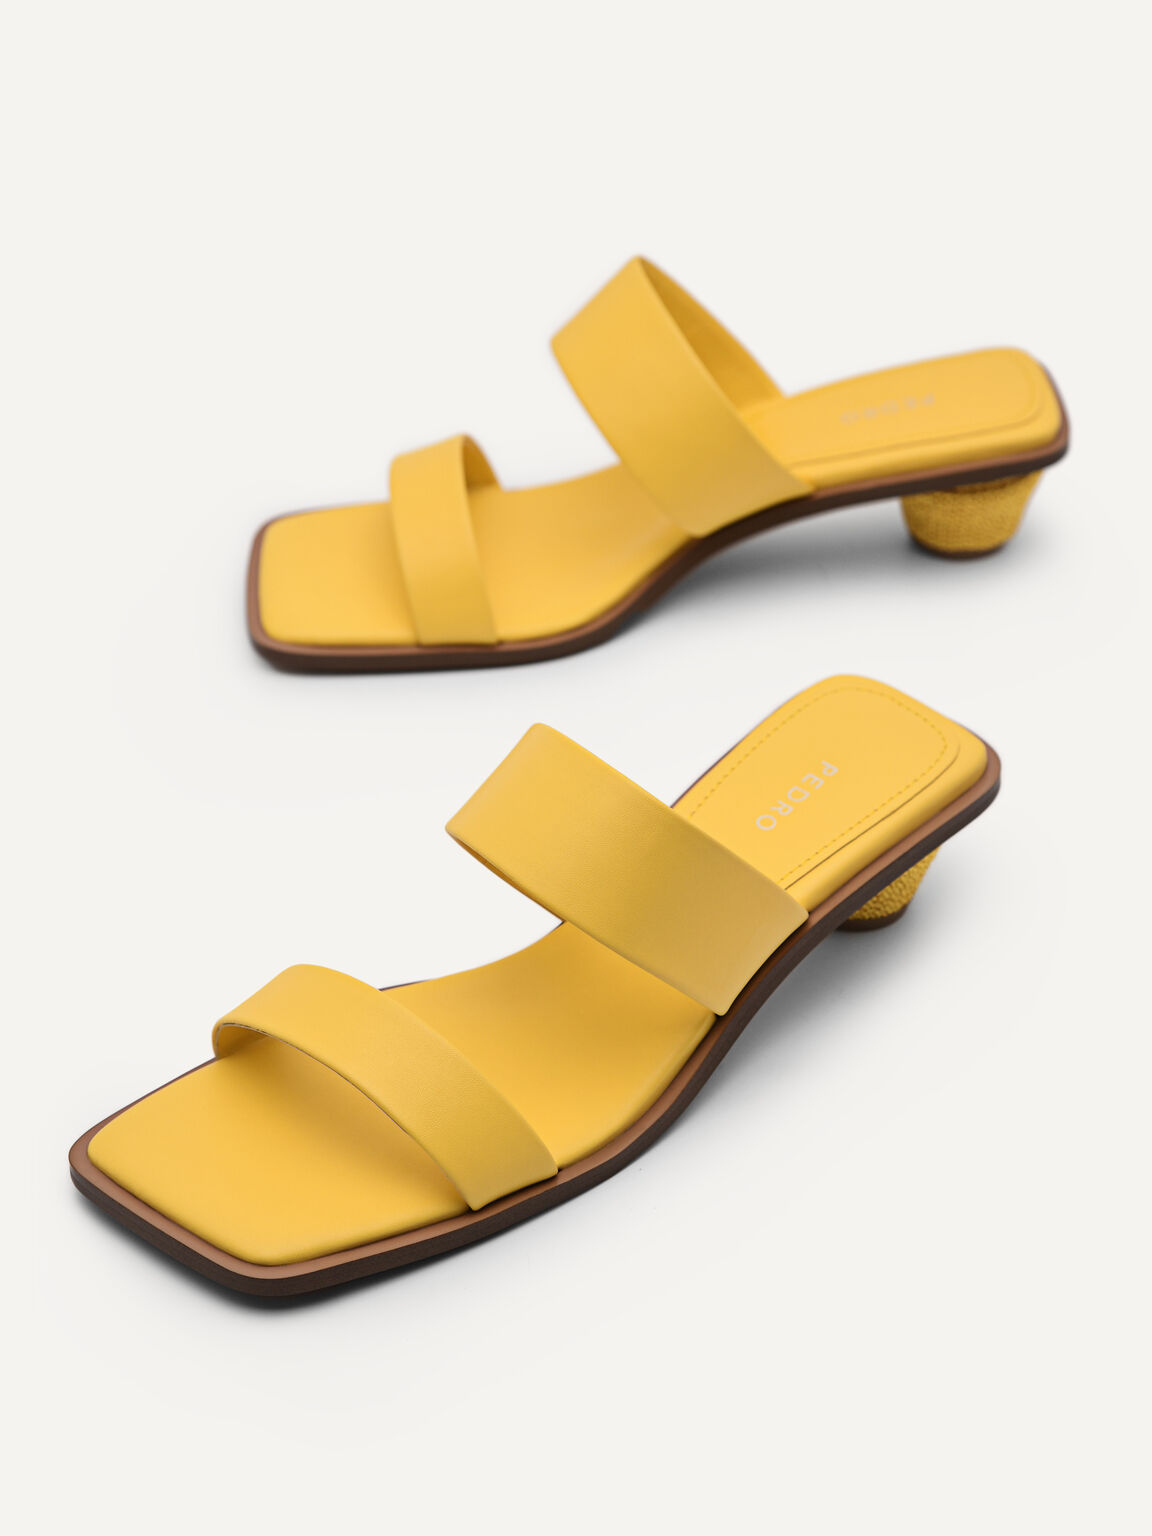 Calico Sandals, Yellow